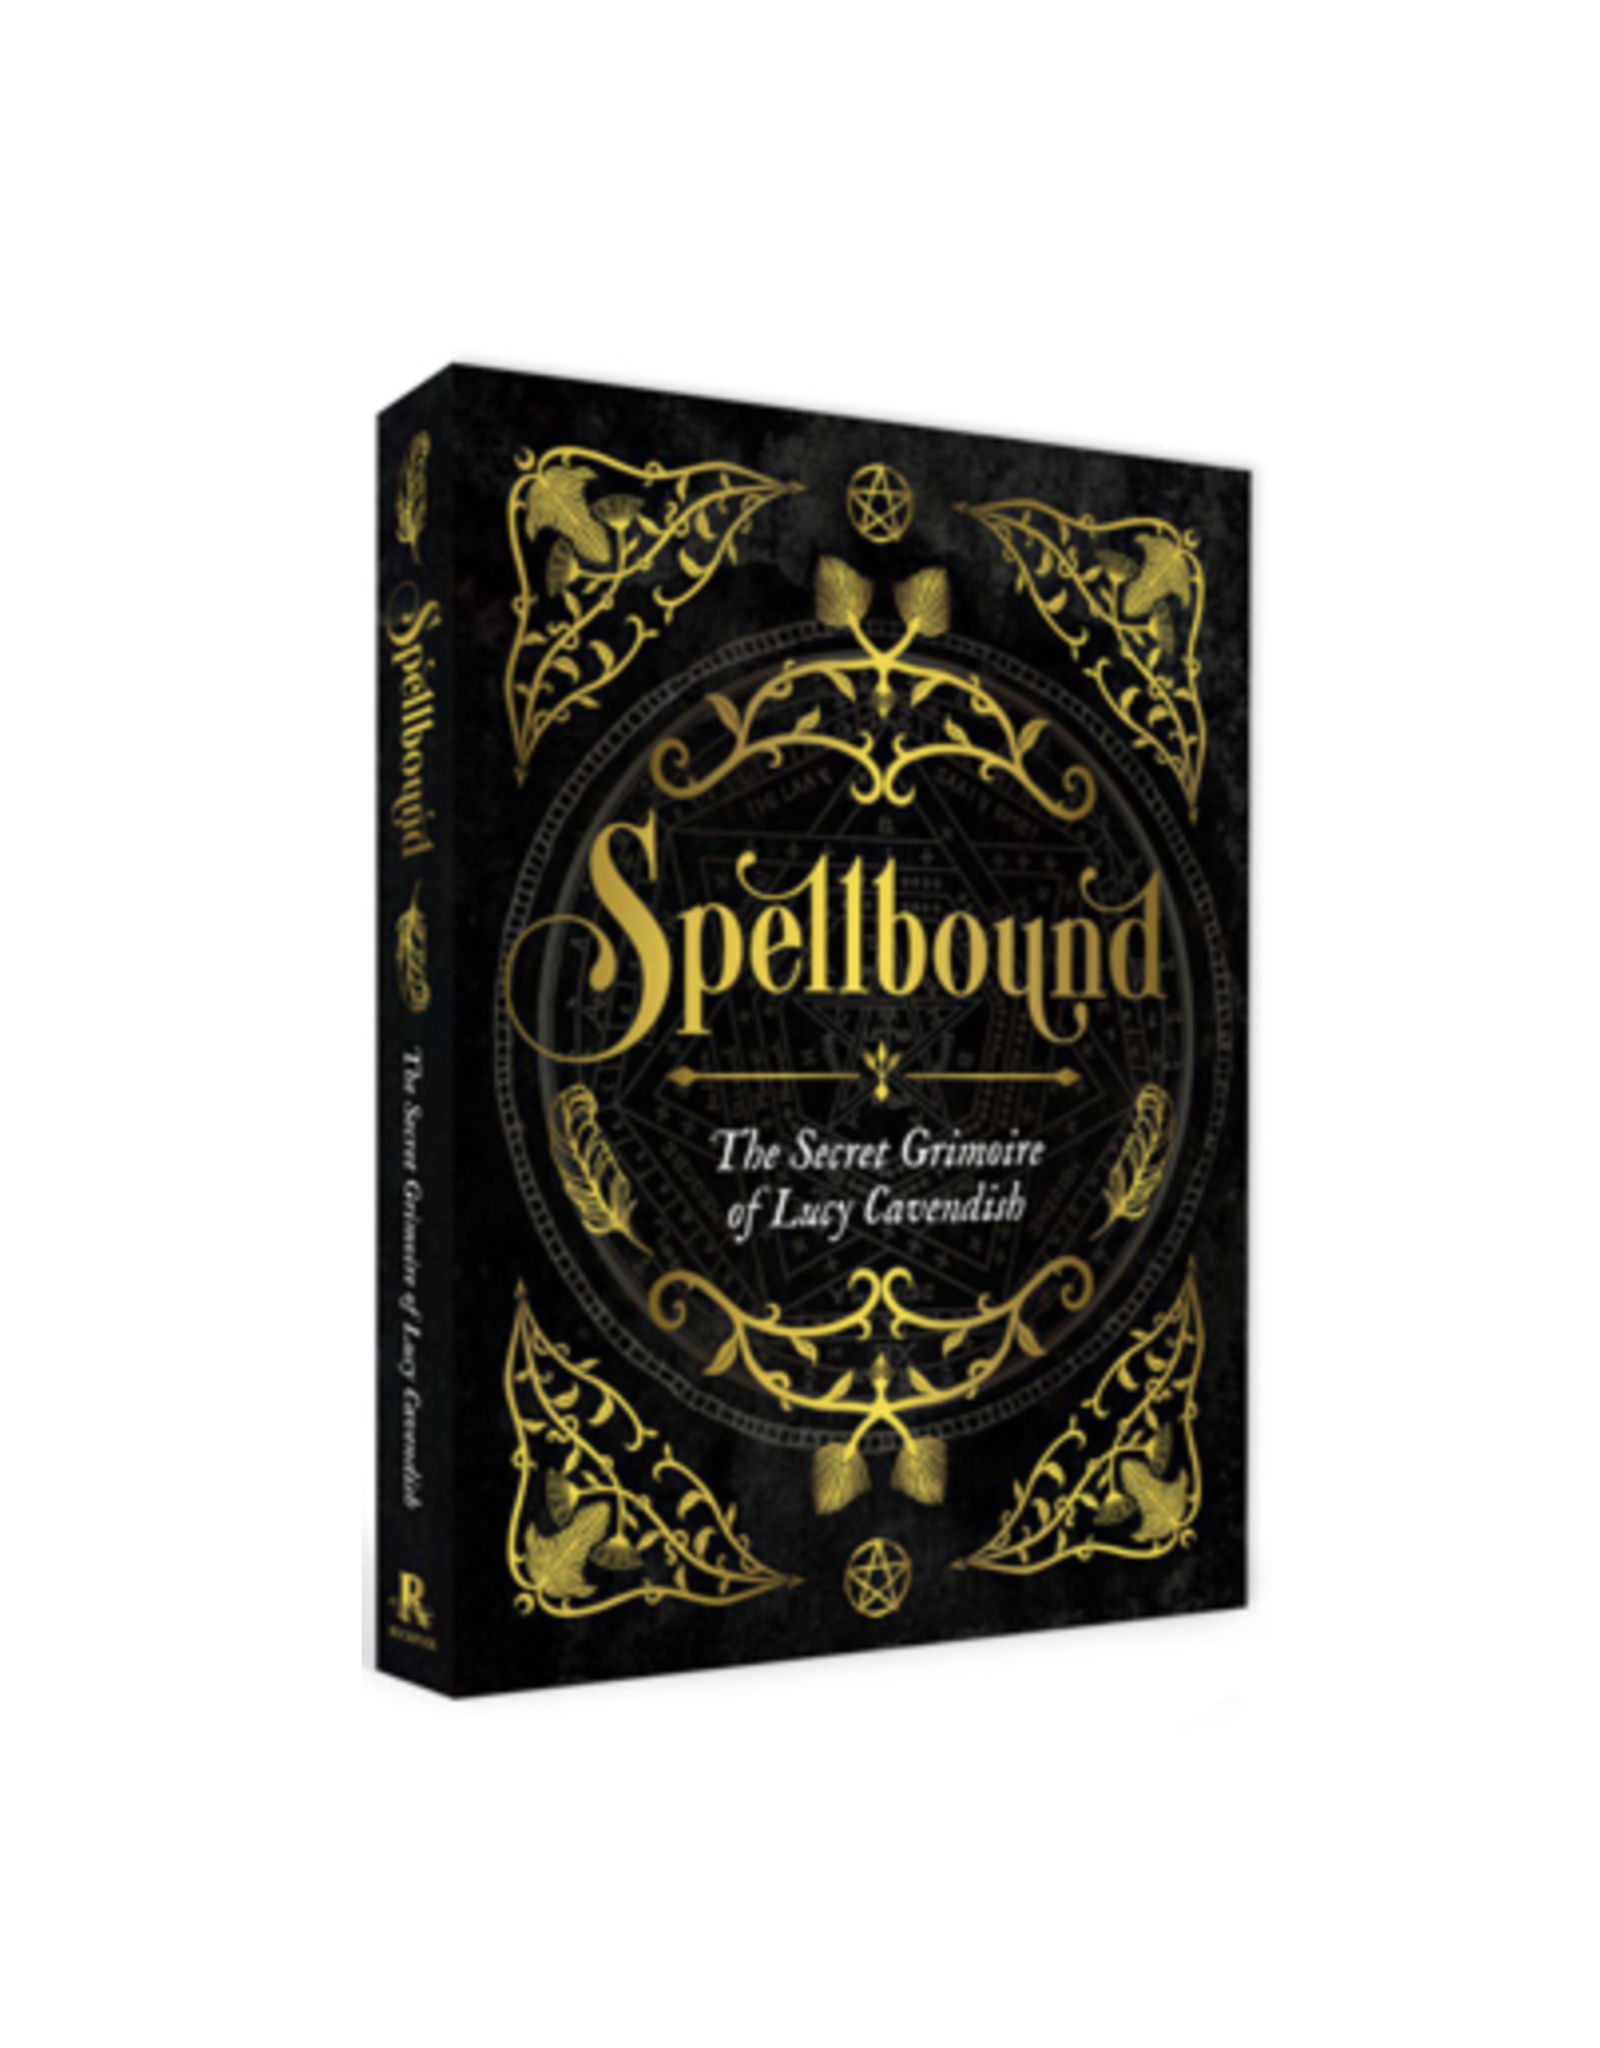 Spellbound - The Secret Grimoire of Lucy Cavendish